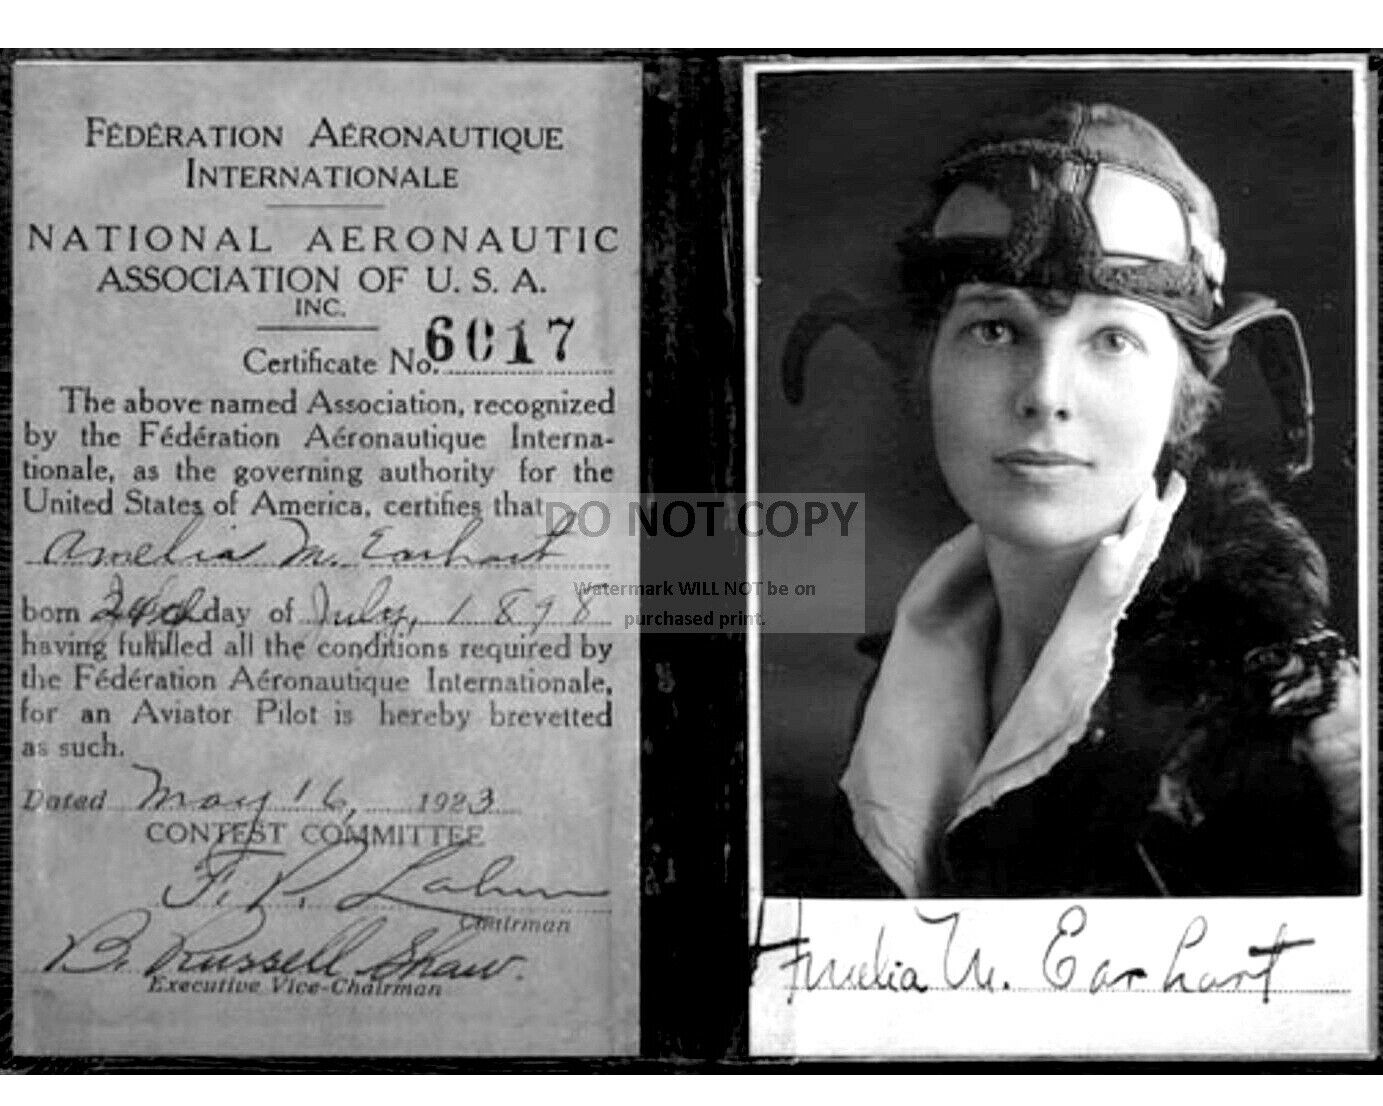 AMELIA EARHART'S PILOT LICENSE FROM 1923 AVIATRIX - 8X10 REPRINT PHOTO (OC007)